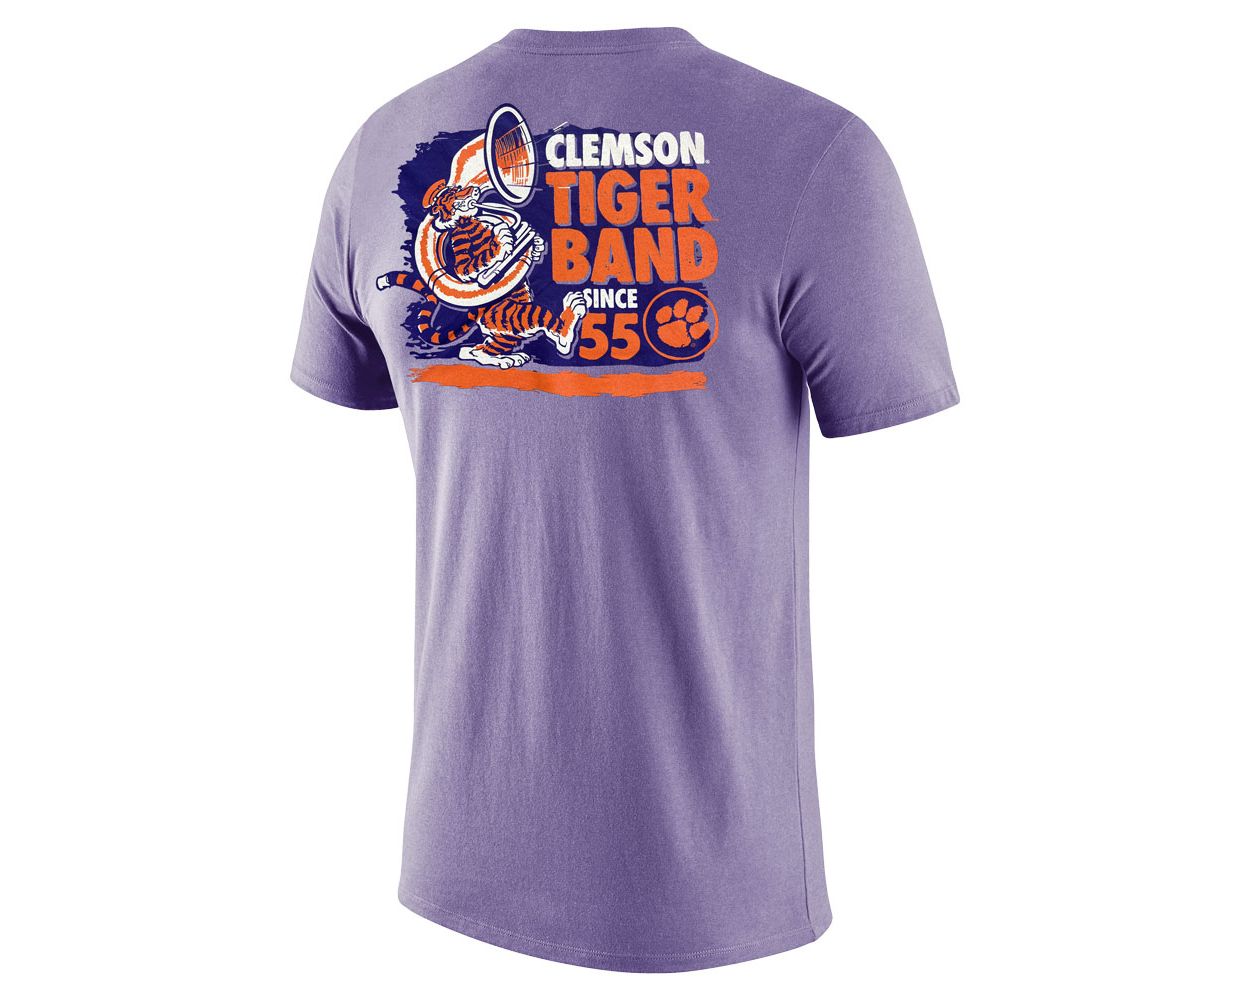 Clemson Tigers softball NCAA gear